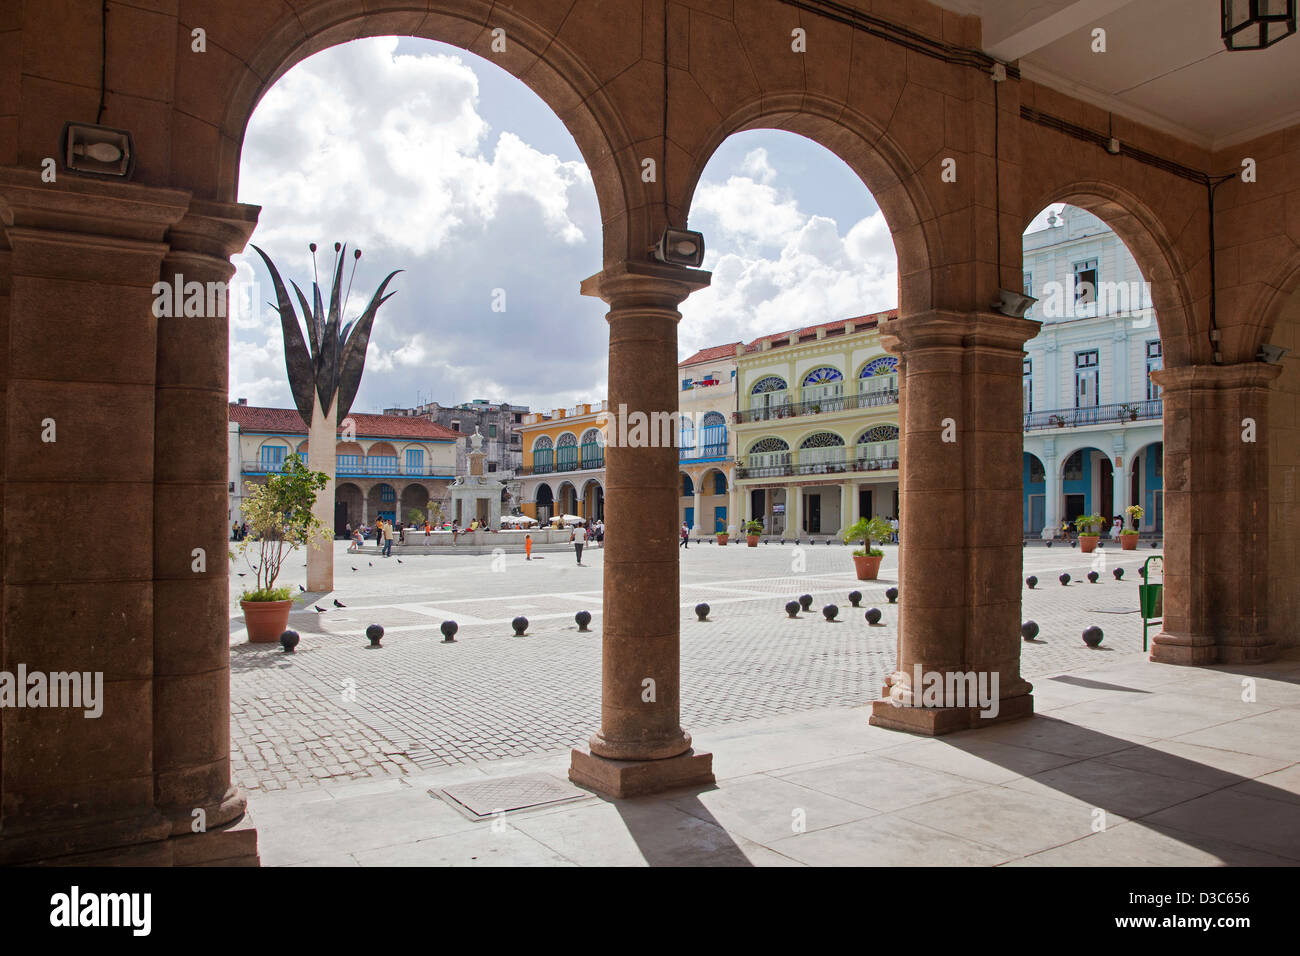 Kolonialen Gebäuden entlang dem alten Platz / Plaza Vieja in Alt-Havanna / La Habana Vieja, Kuba, Caribbean Stockfoto